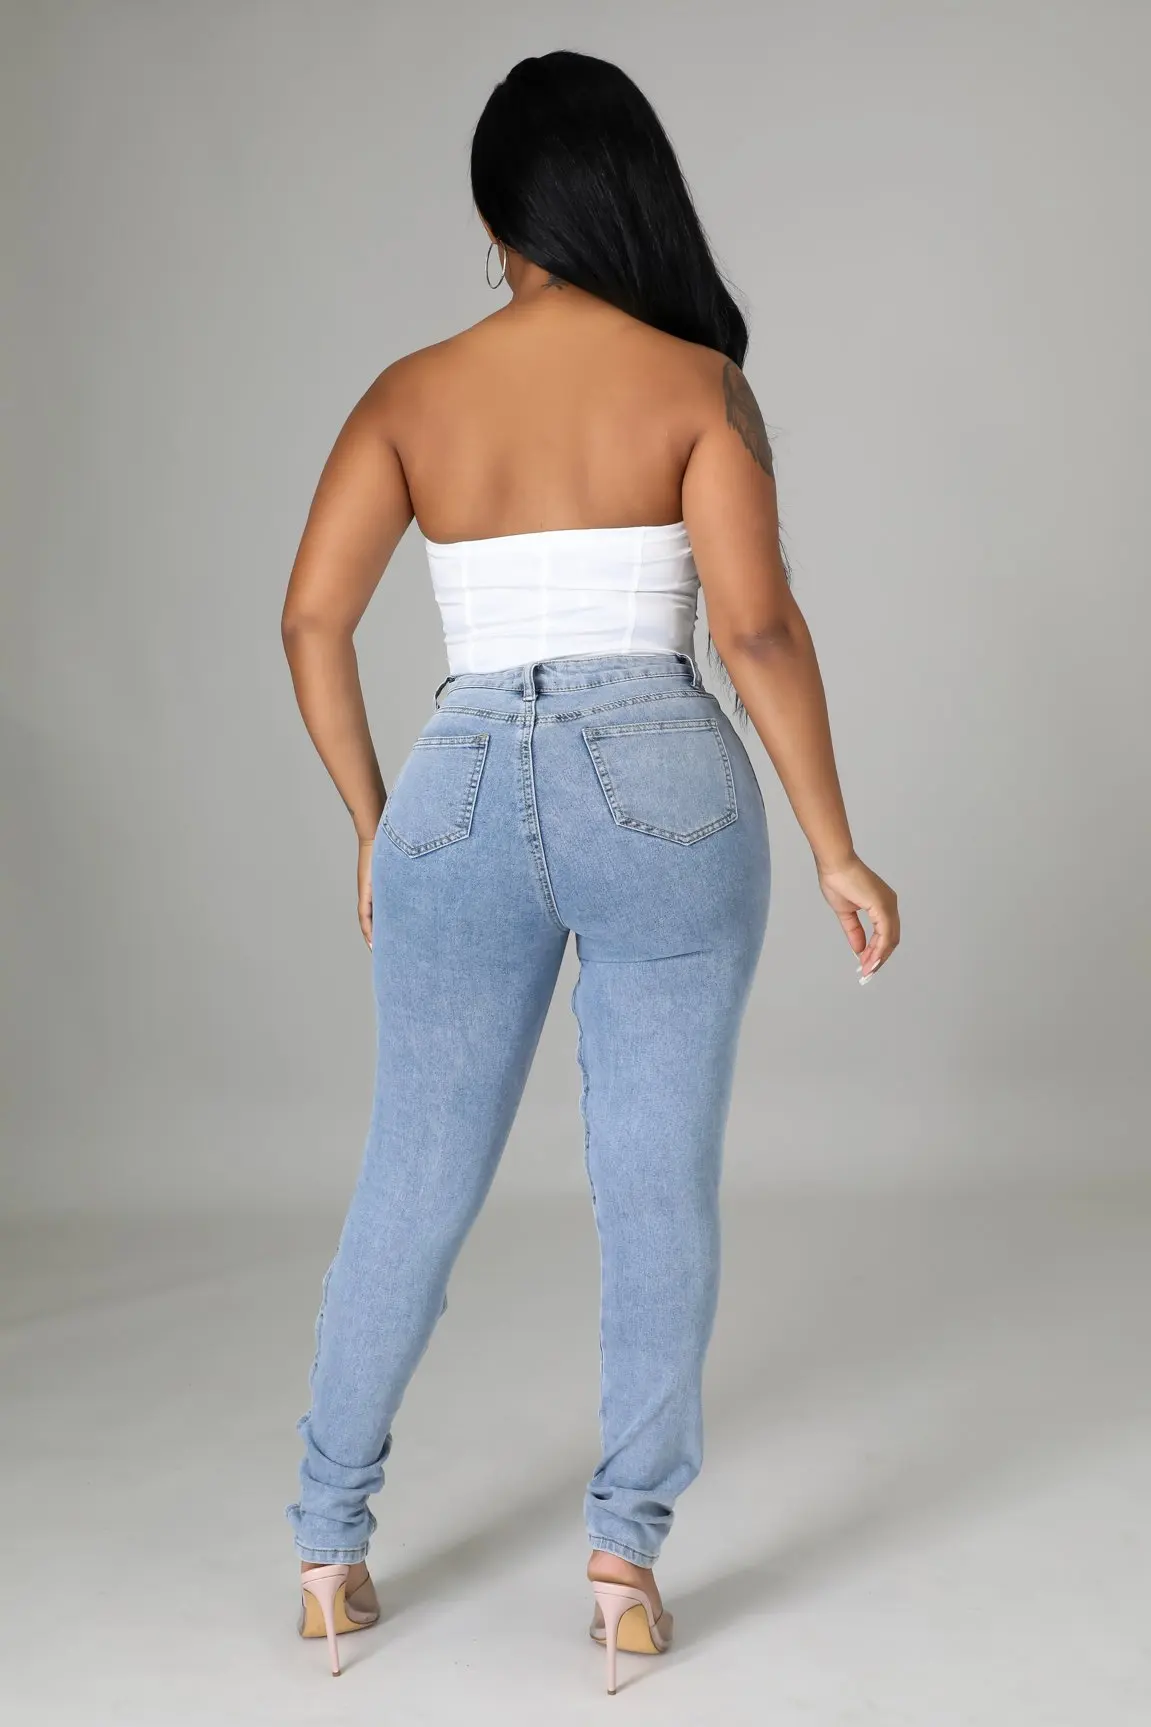 pantalones de mujer stretchy jeans trousers skinny pants plus size jeans pant women femme denim fashion bandage jeans 2022